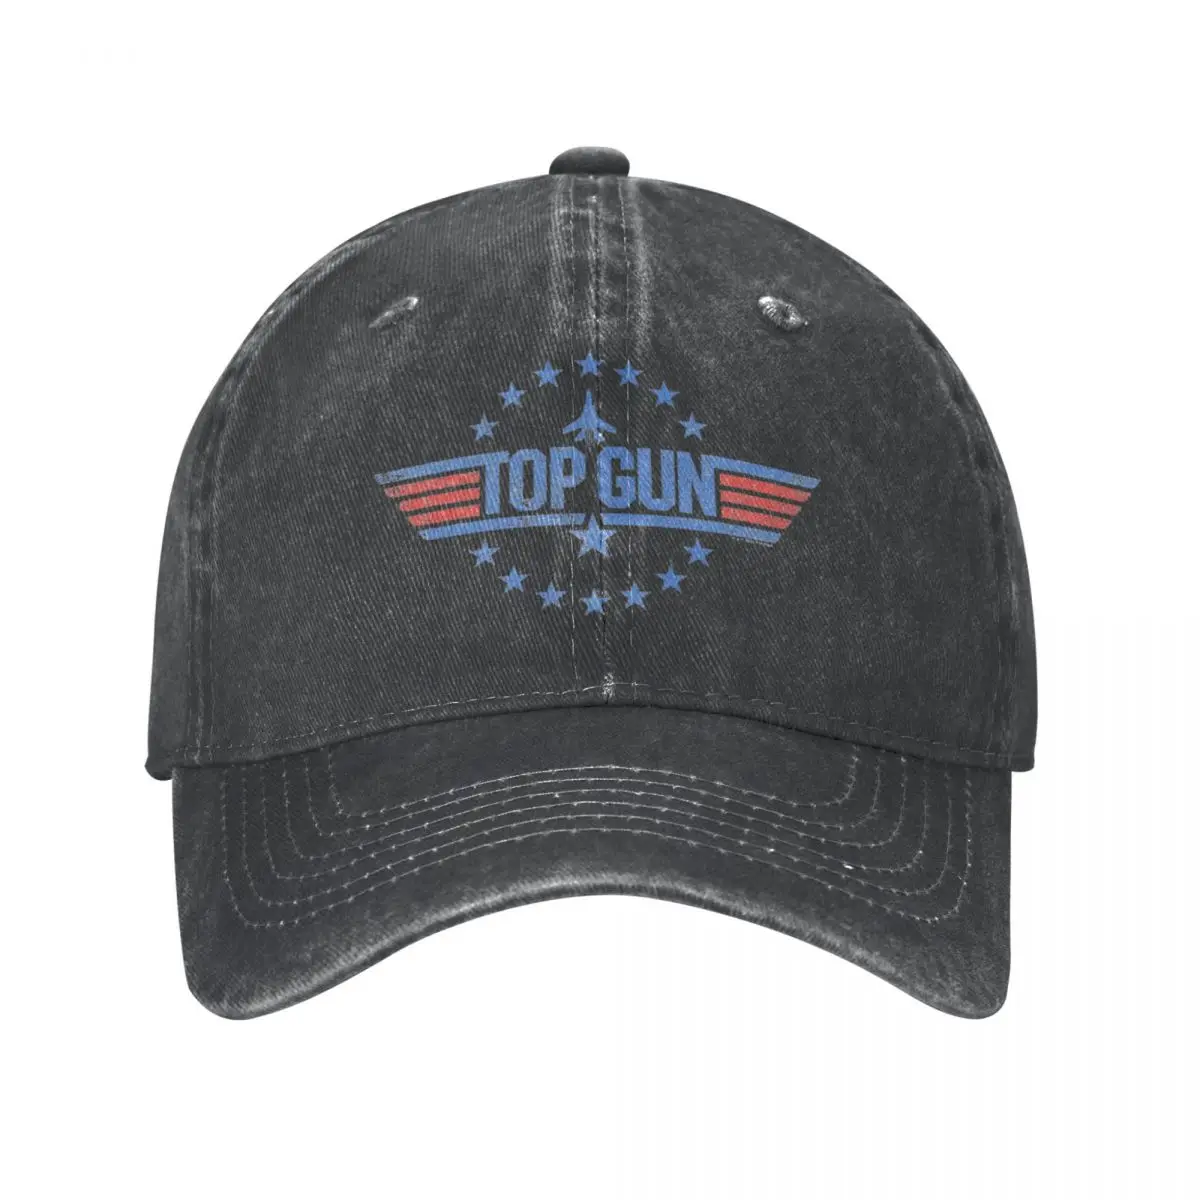 

Vintage Top Gun Maverick Movie Baseball Cap Unisex Style Distressed Cotton Snapback Cap US Fighter Outdoor Activities Caps Hat